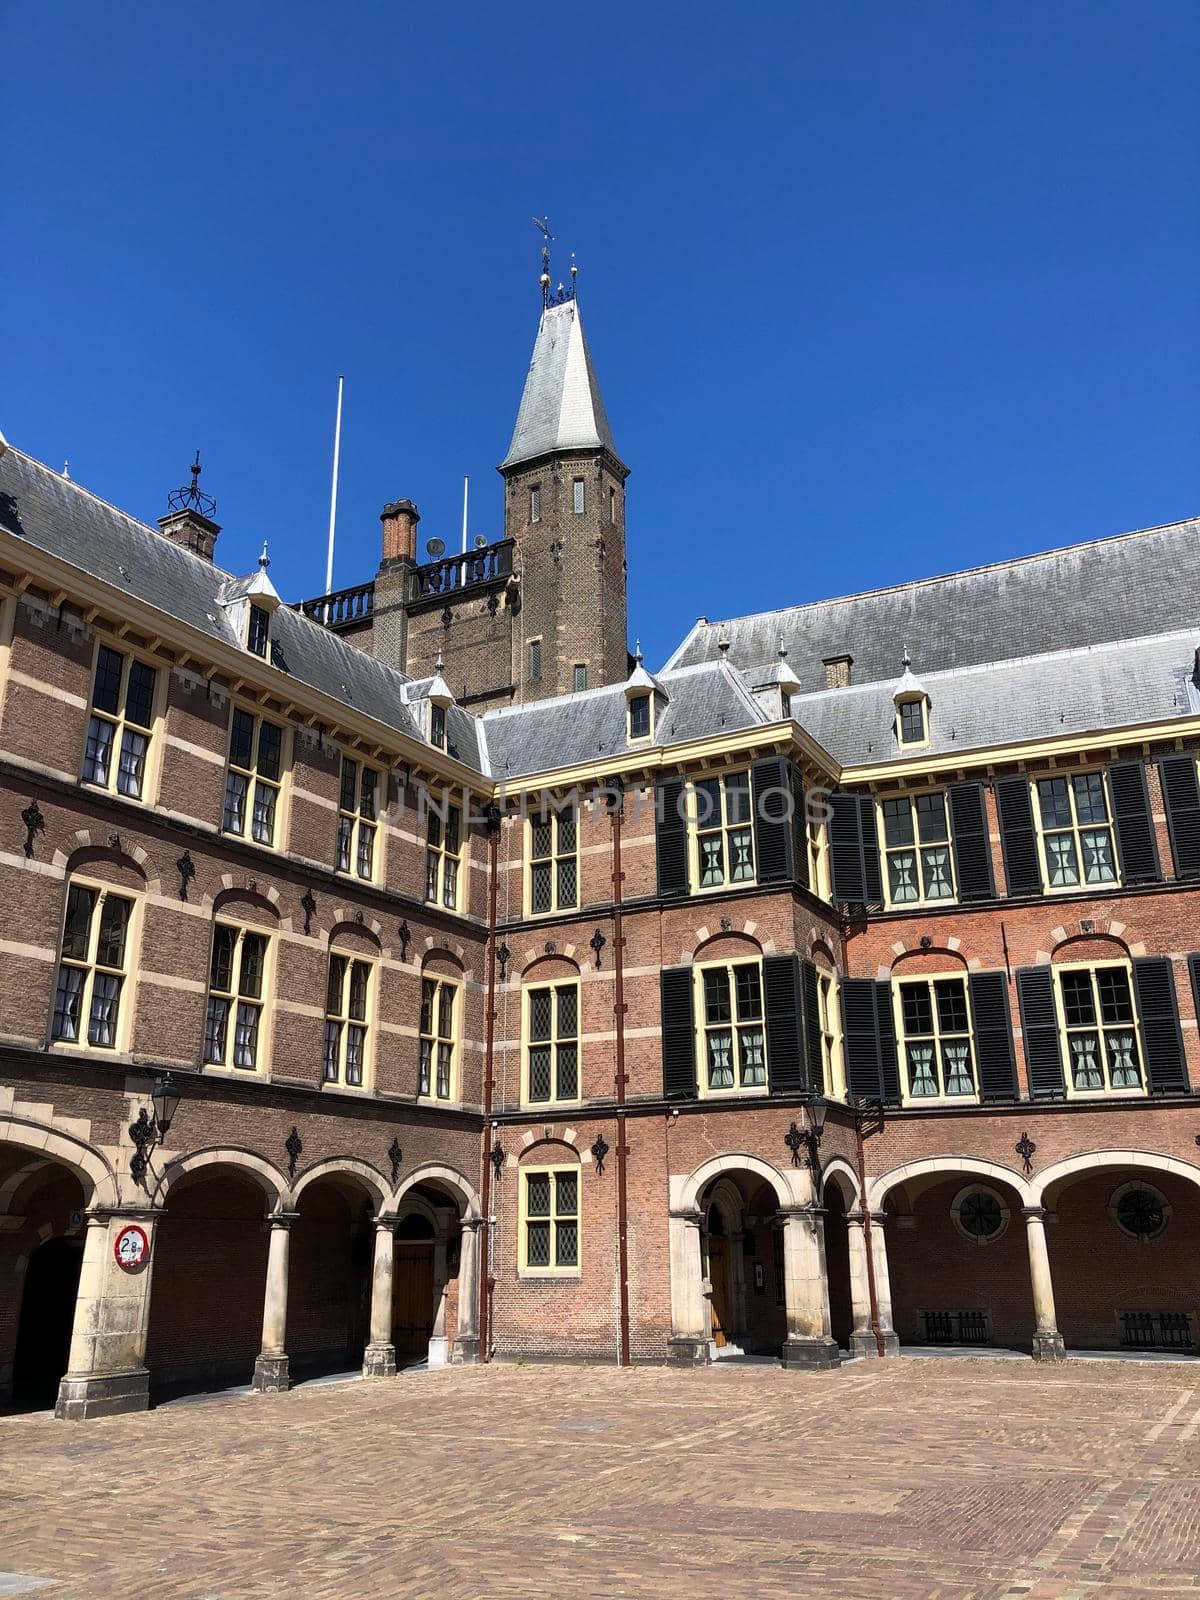 The Binnenhof in The Hague, The Netherlands